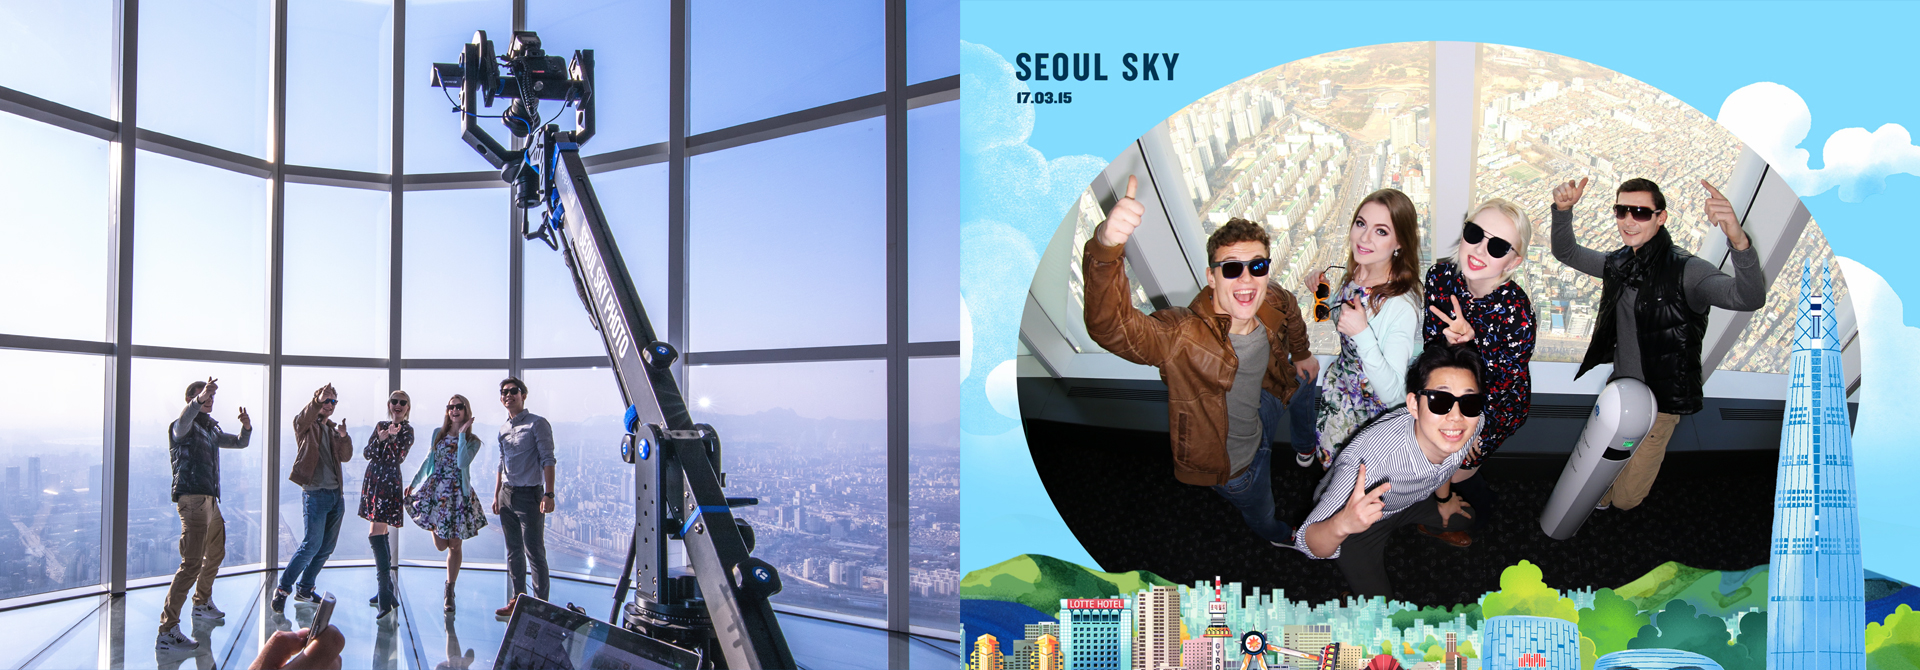 Seoul Sky全景